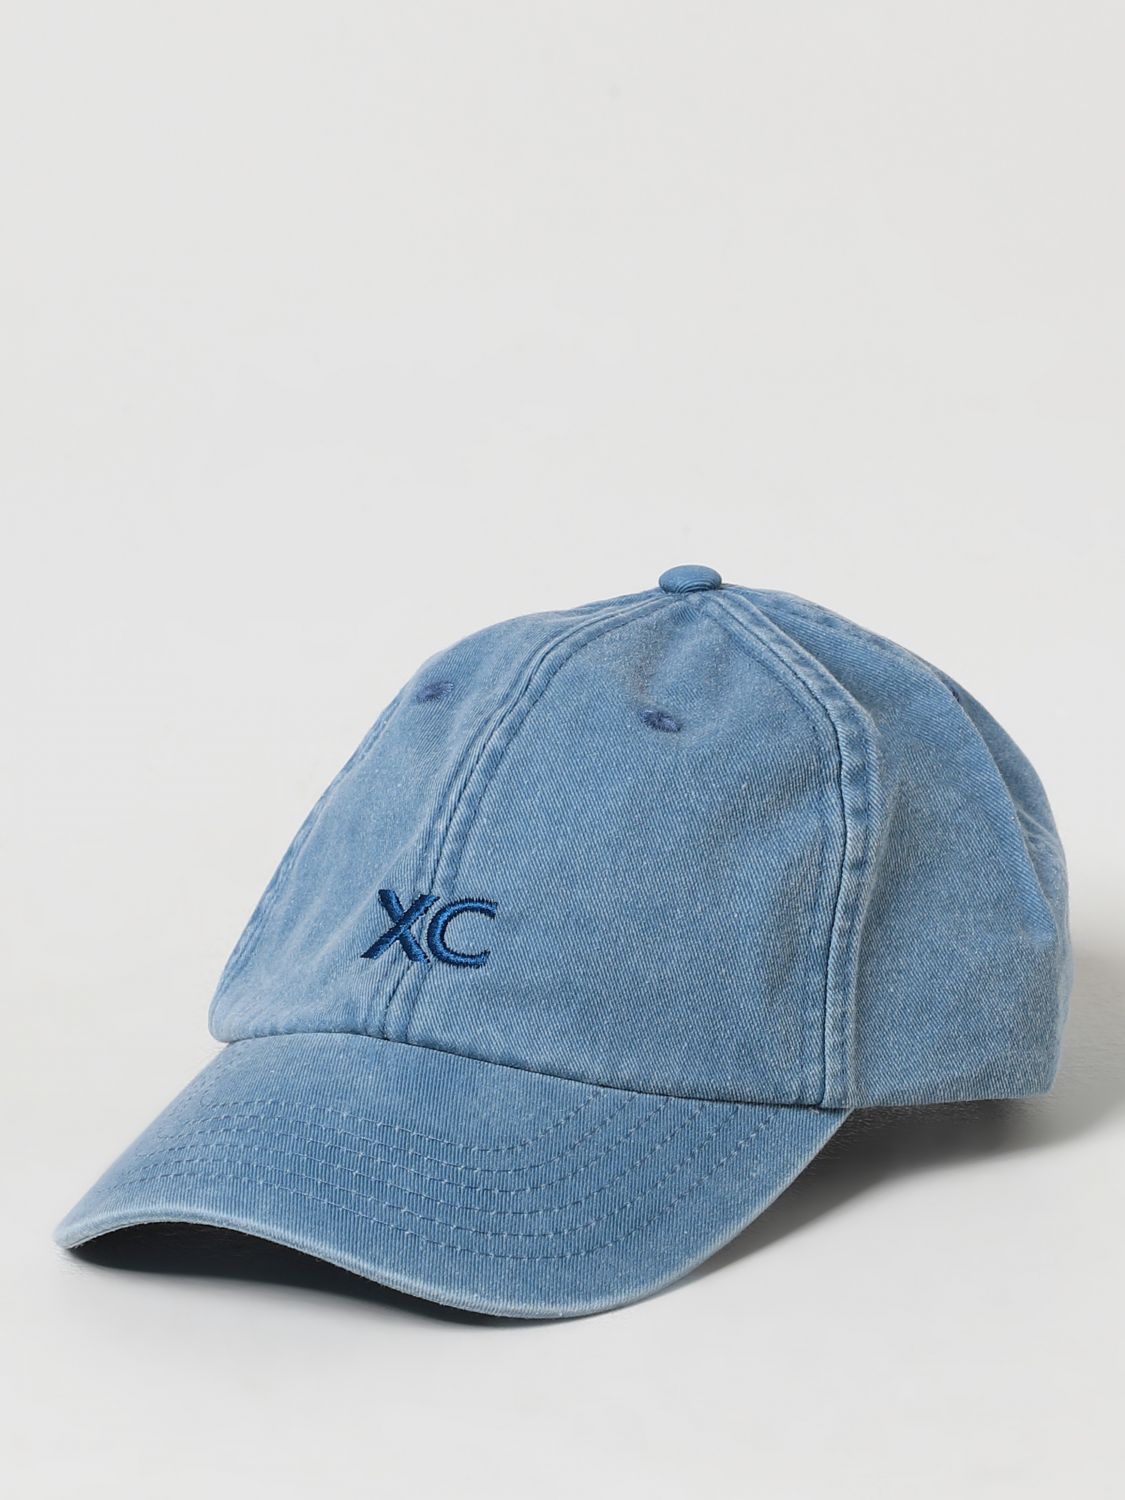 Xc Hat XC Men color Gnawed Blue